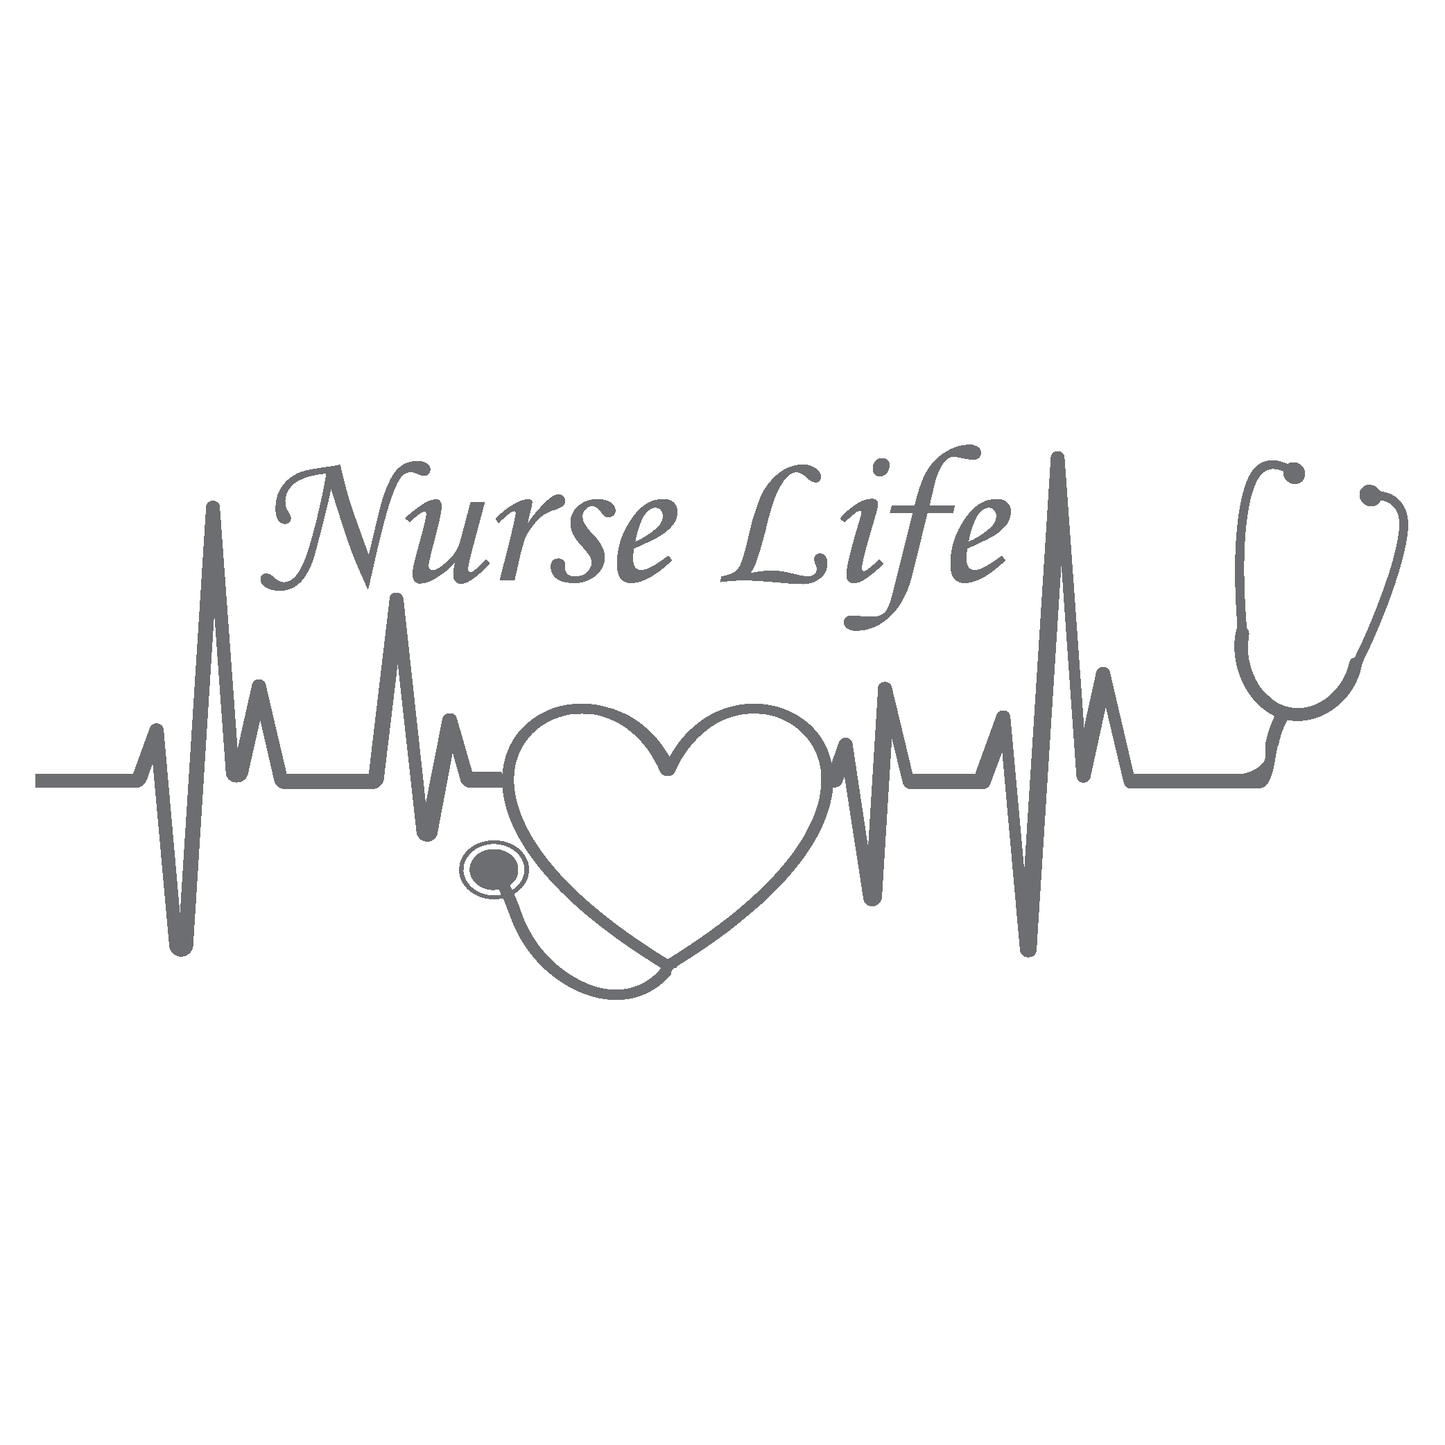 ShopVinylDesignStore.com Heartbeat Nurse Life Wide Shop Vinyl Design decals stickers